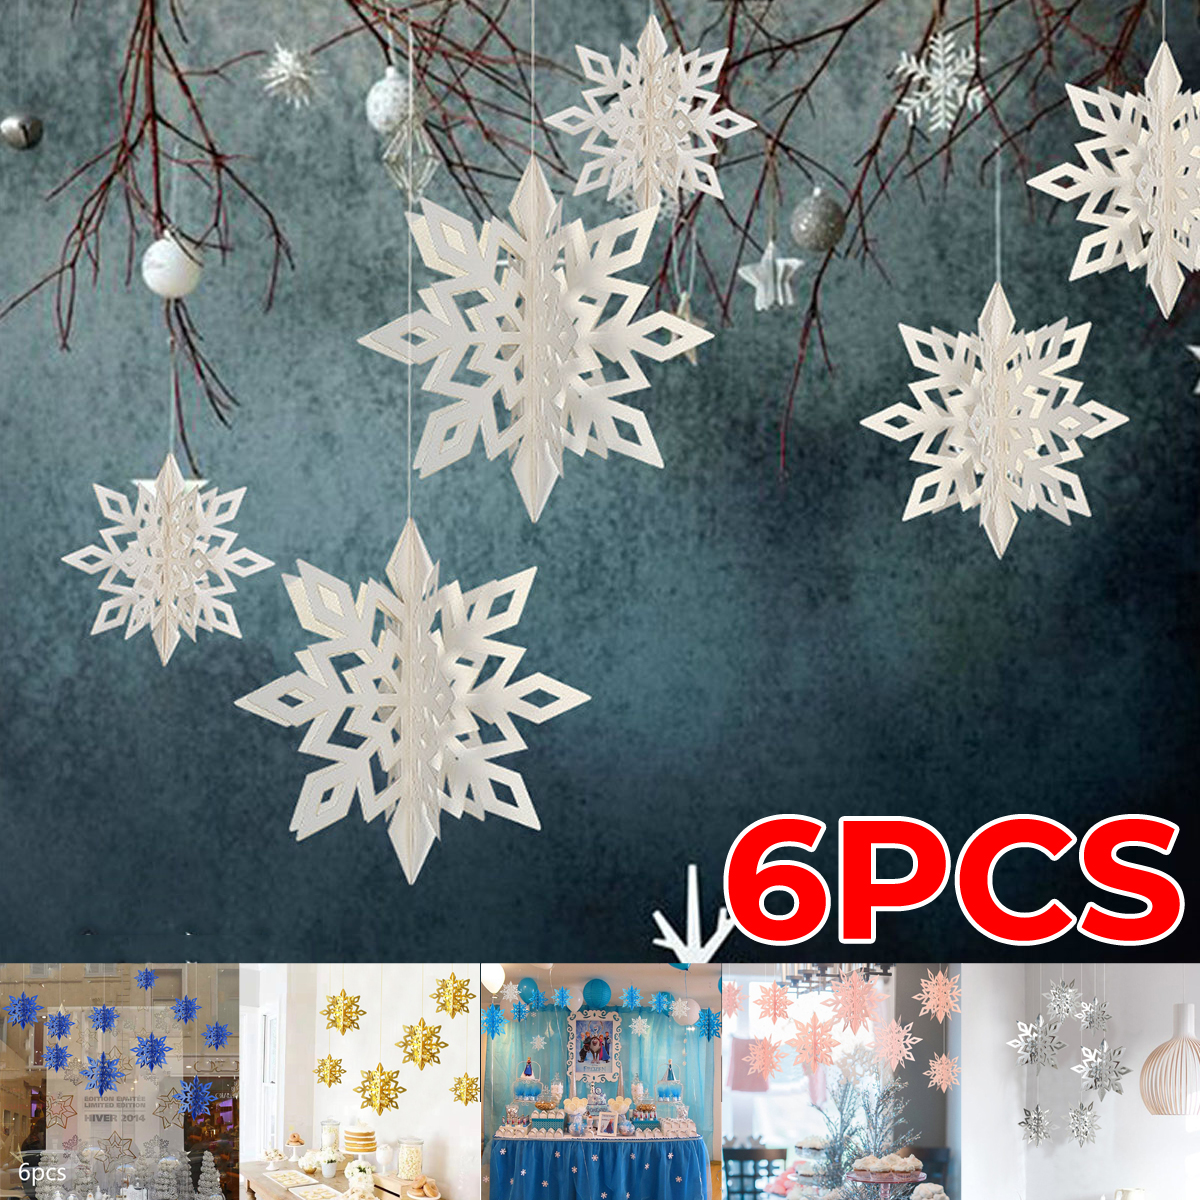 6pcs-Christmas-Party-Hanging-Decoration-Baubles-Xmas-Snowflakes-Home-Bar-Decor-1744746-1